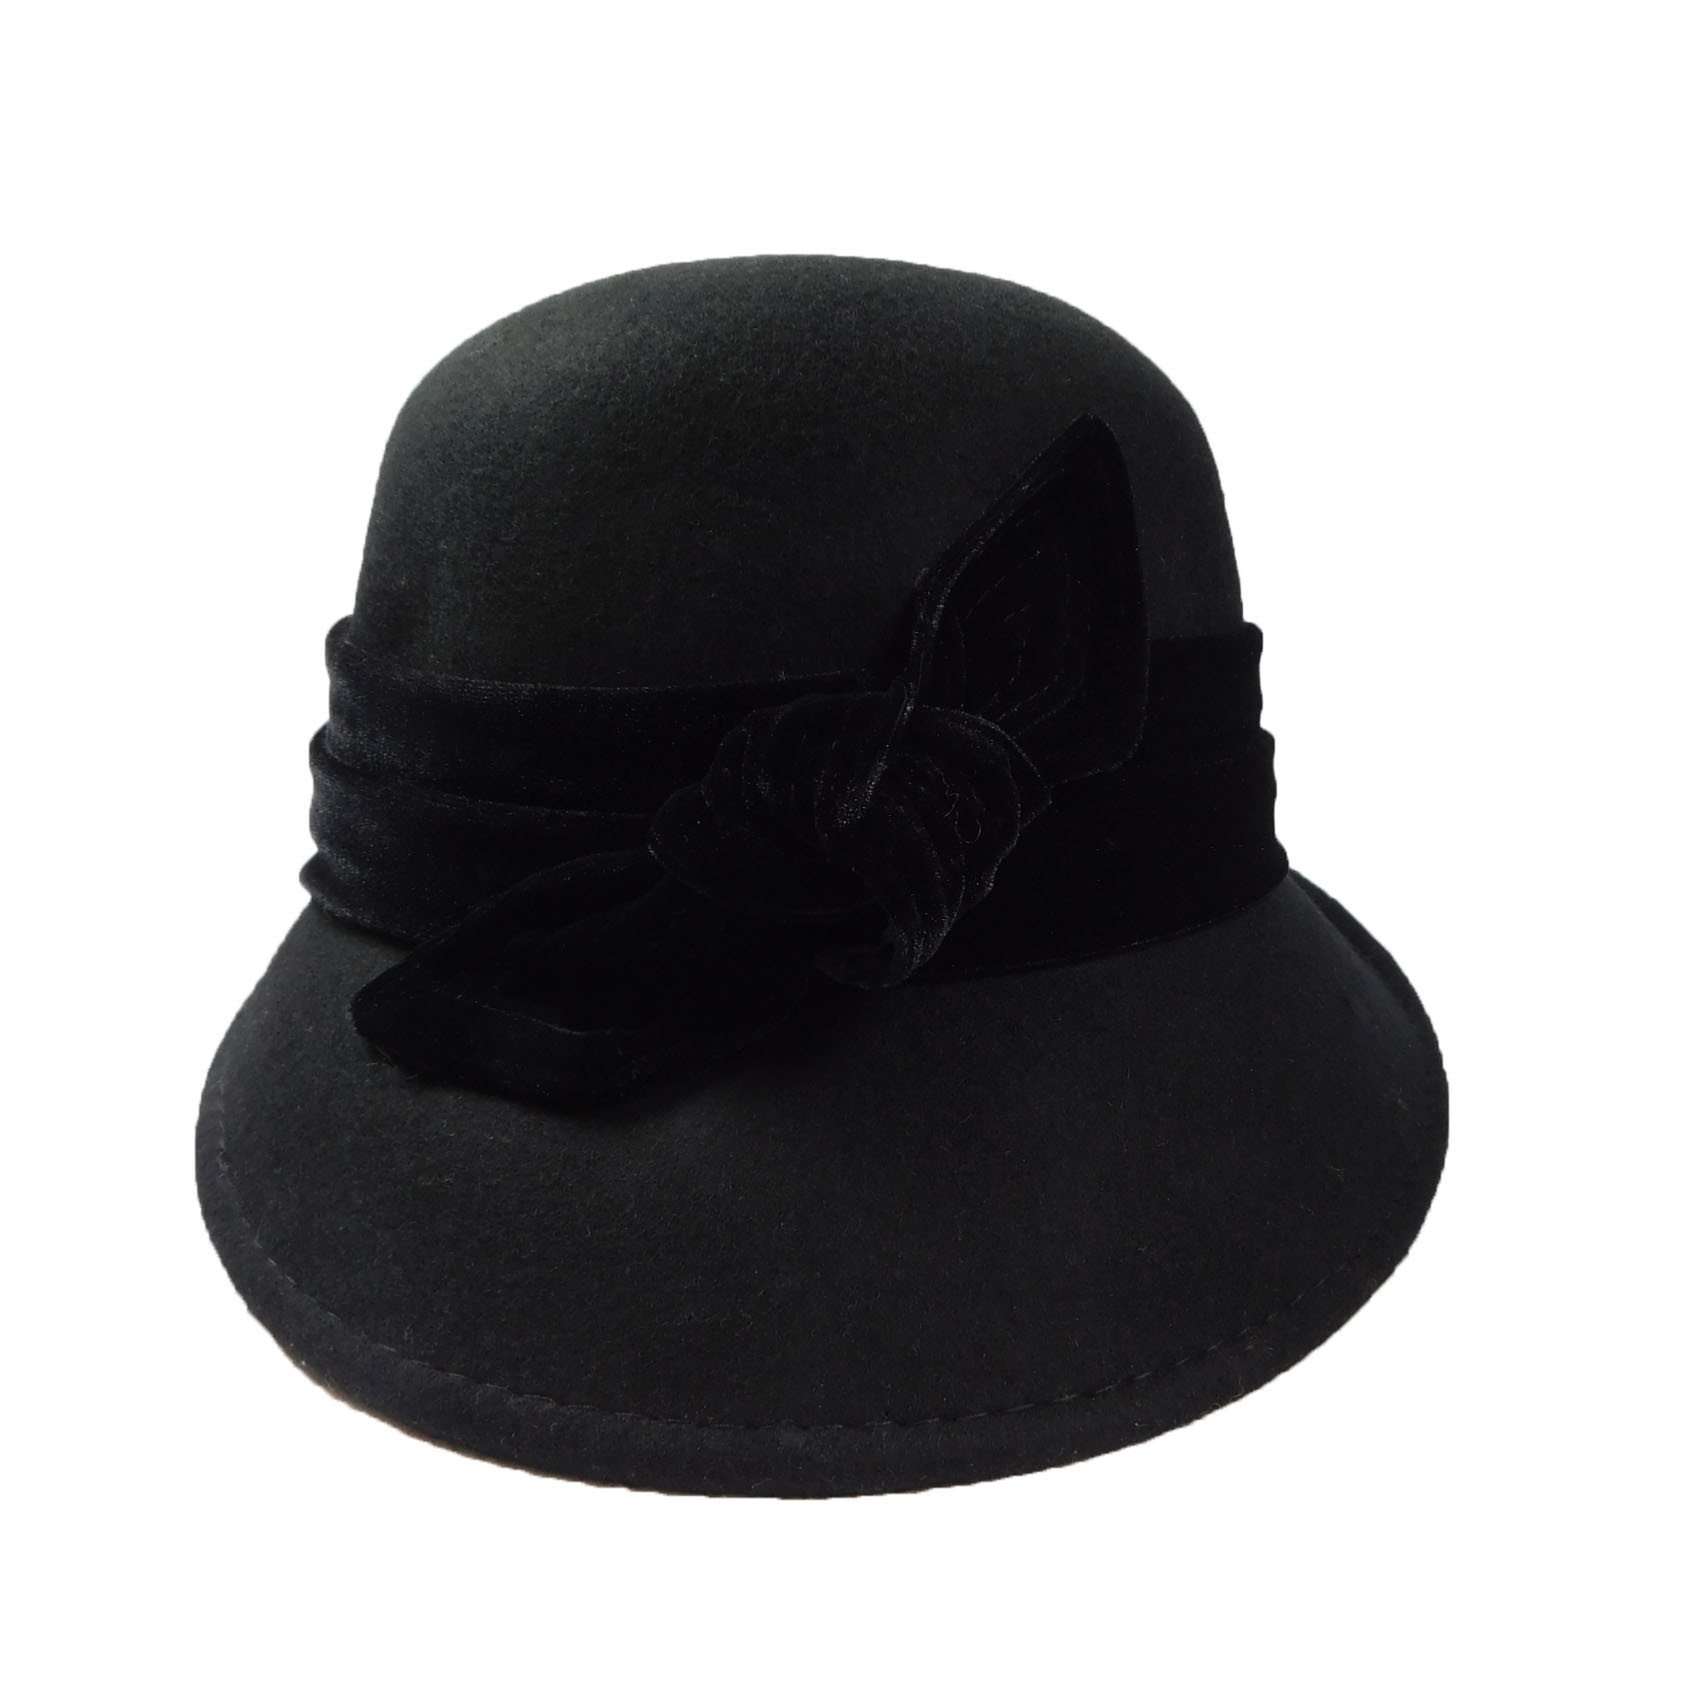 Curled Brim Slanted Cloche Wool Hat with Velvet Bow - Scala Hats Cloche Scala Hats lf170BK Black  